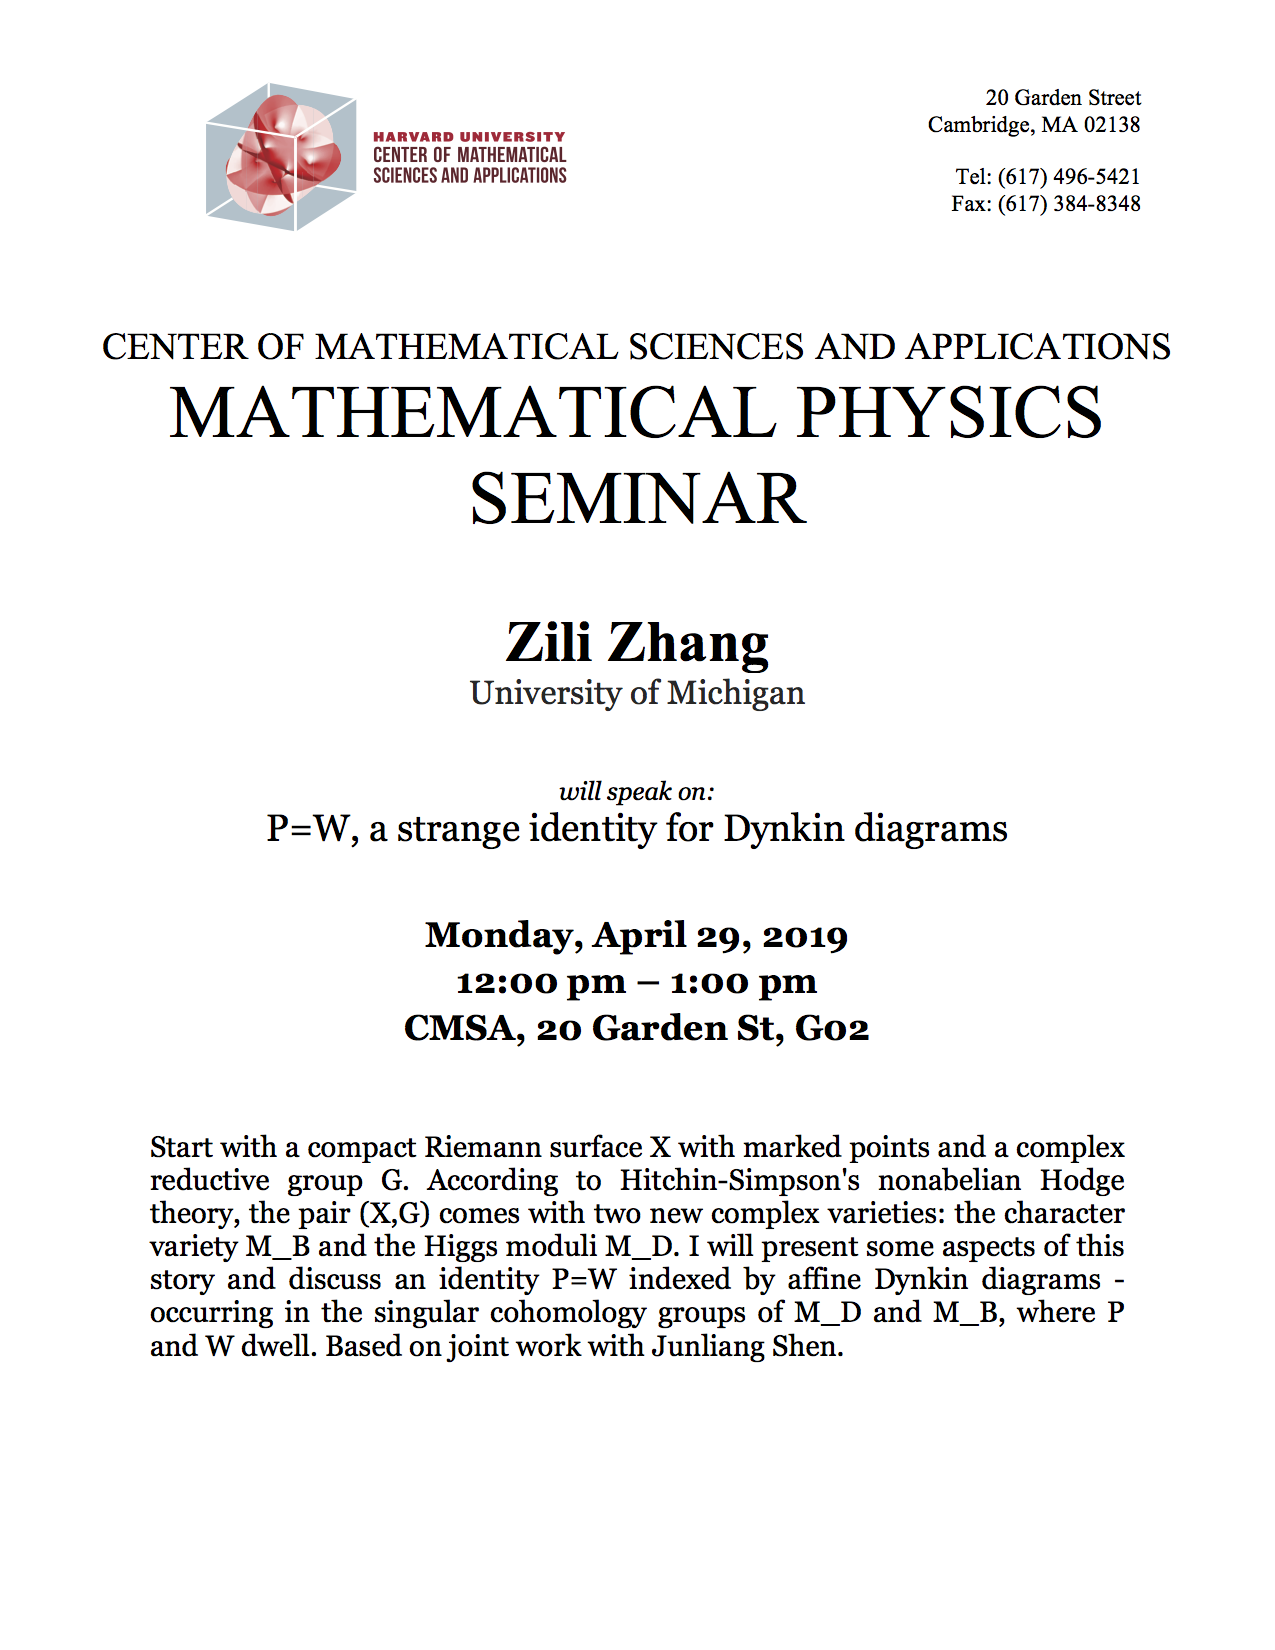 Mathematical Physics Seminar